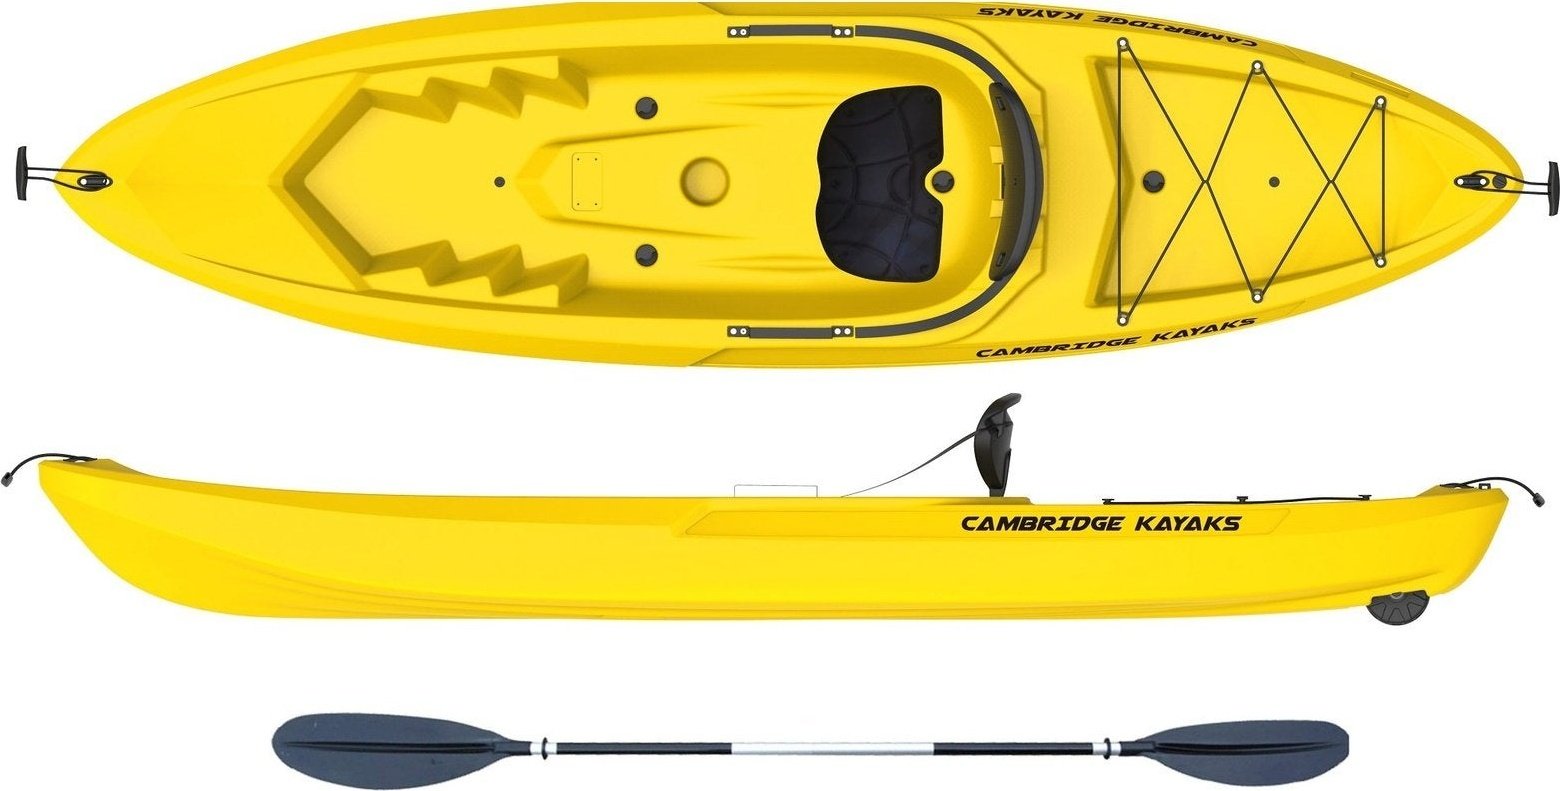 Cambridge Kayak Deluxe padded kayaking seat review - Yachting World